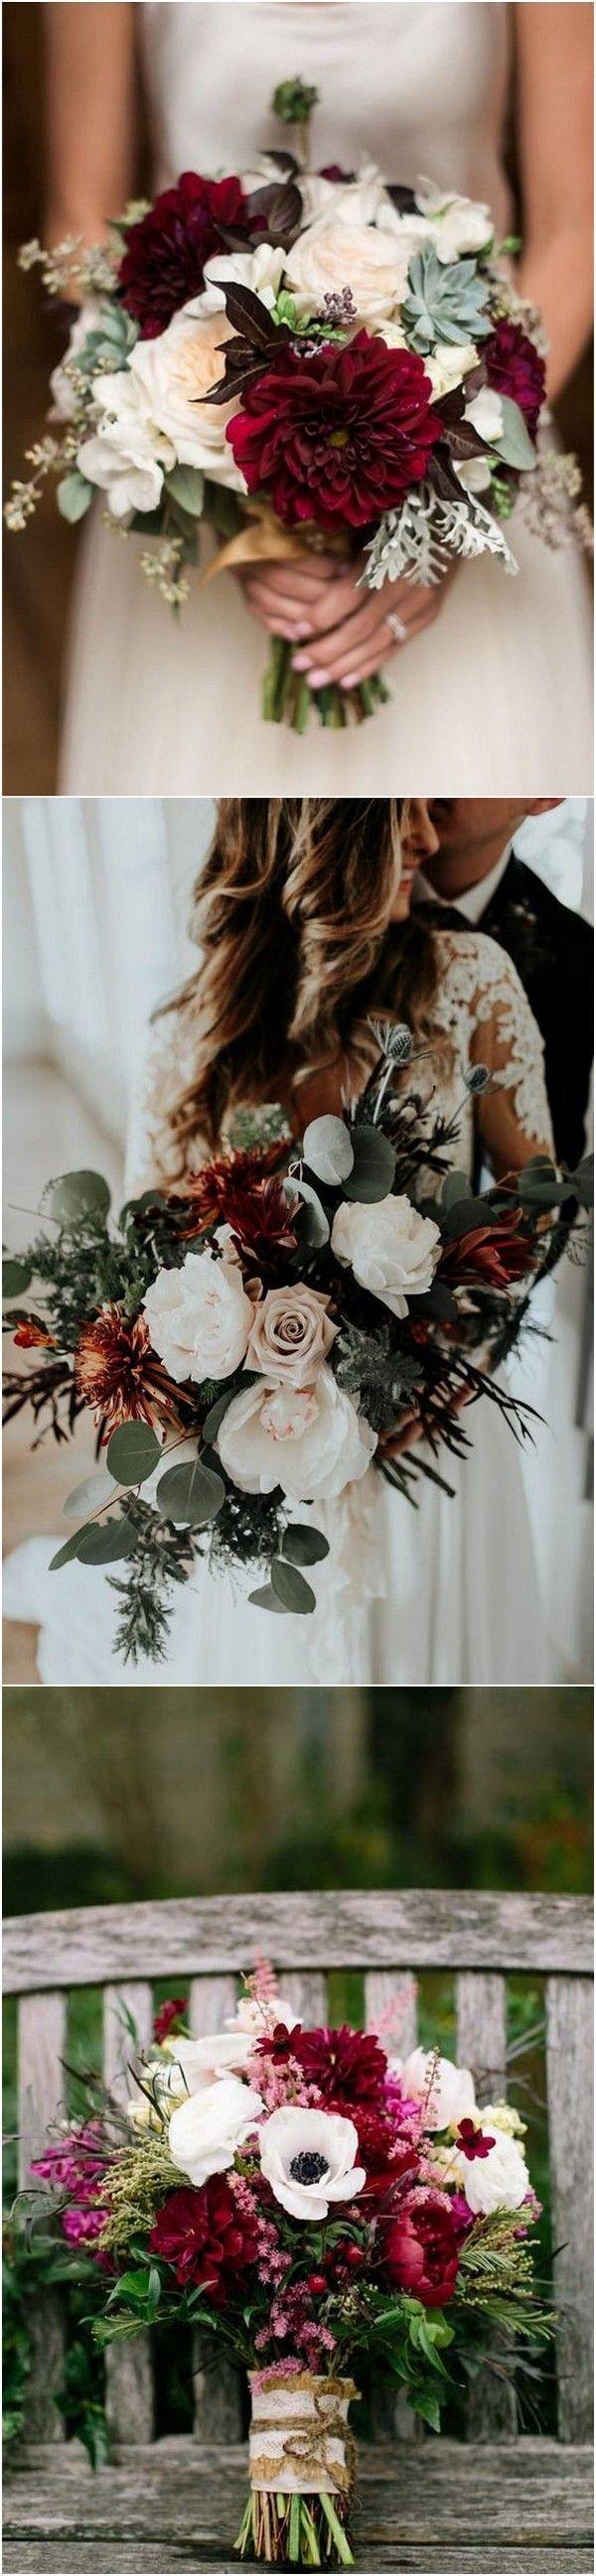 زفاف - Top 20 Fall Wedding Bouquets To Inspire Your Big Day - Page 2 Of 2